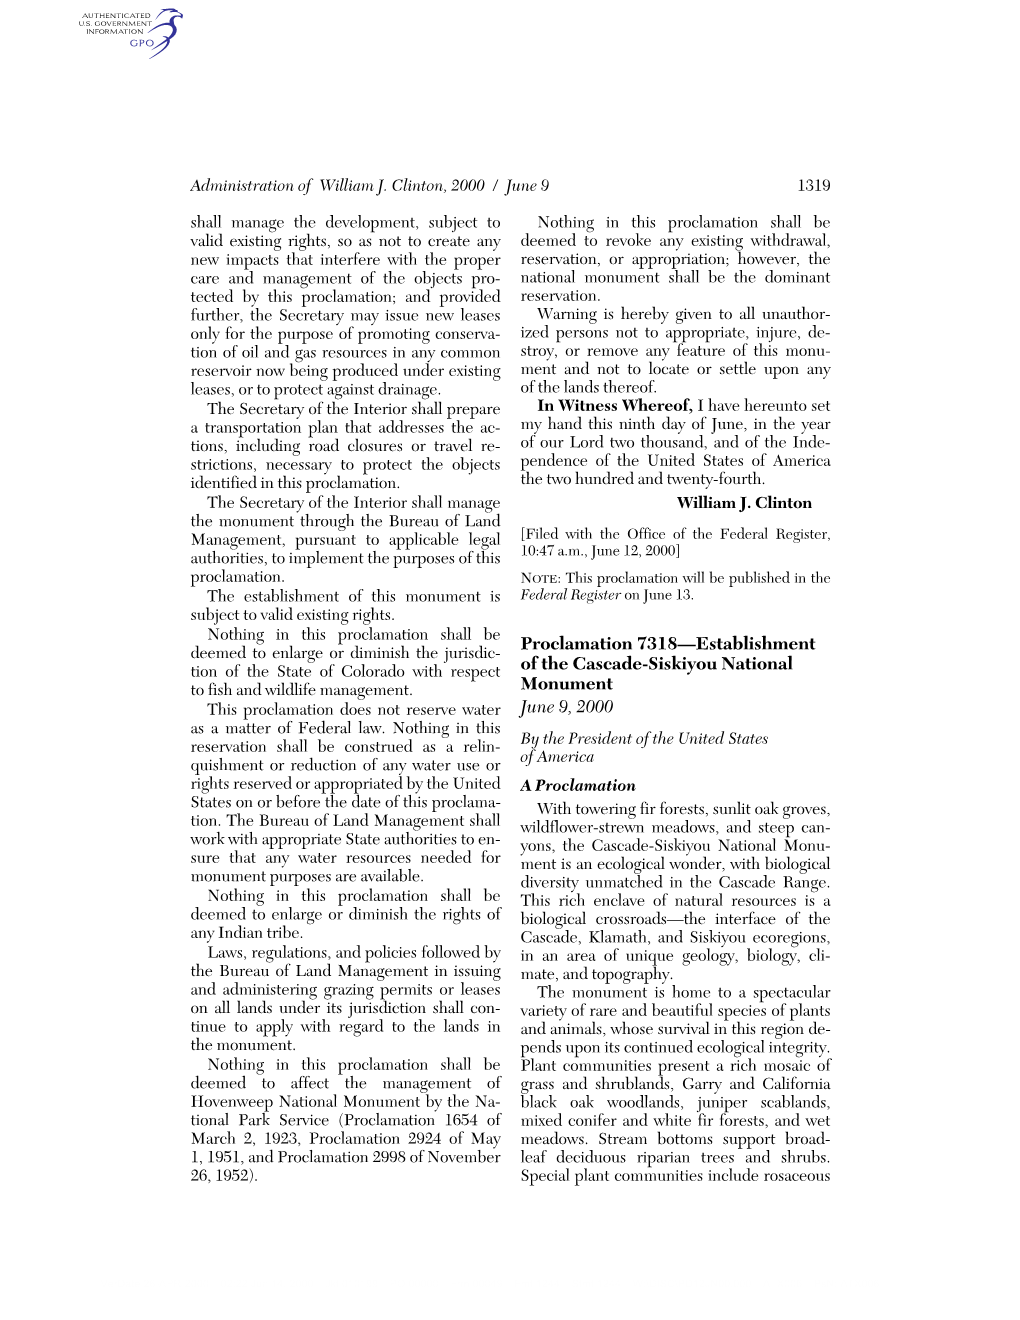 Proclamation 7318—Establishment of the Cascade-Siskiyou National